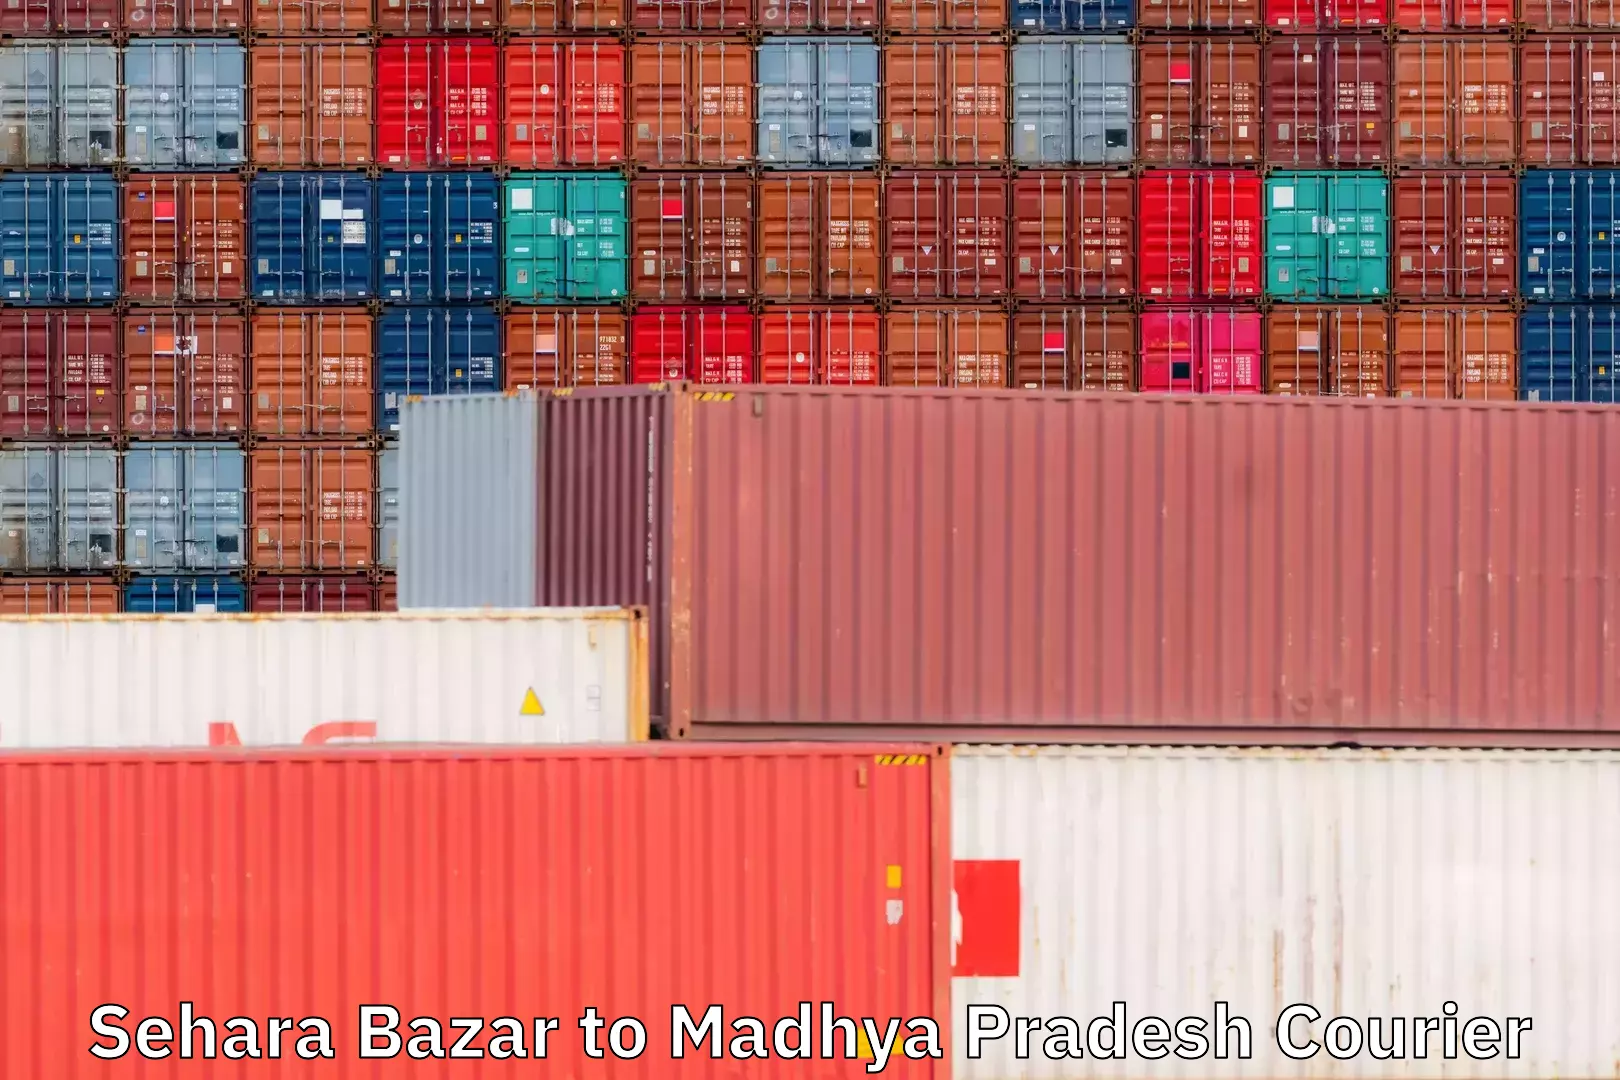 Rapid freight solutions Sehara Bazar to Madhya Pradesh